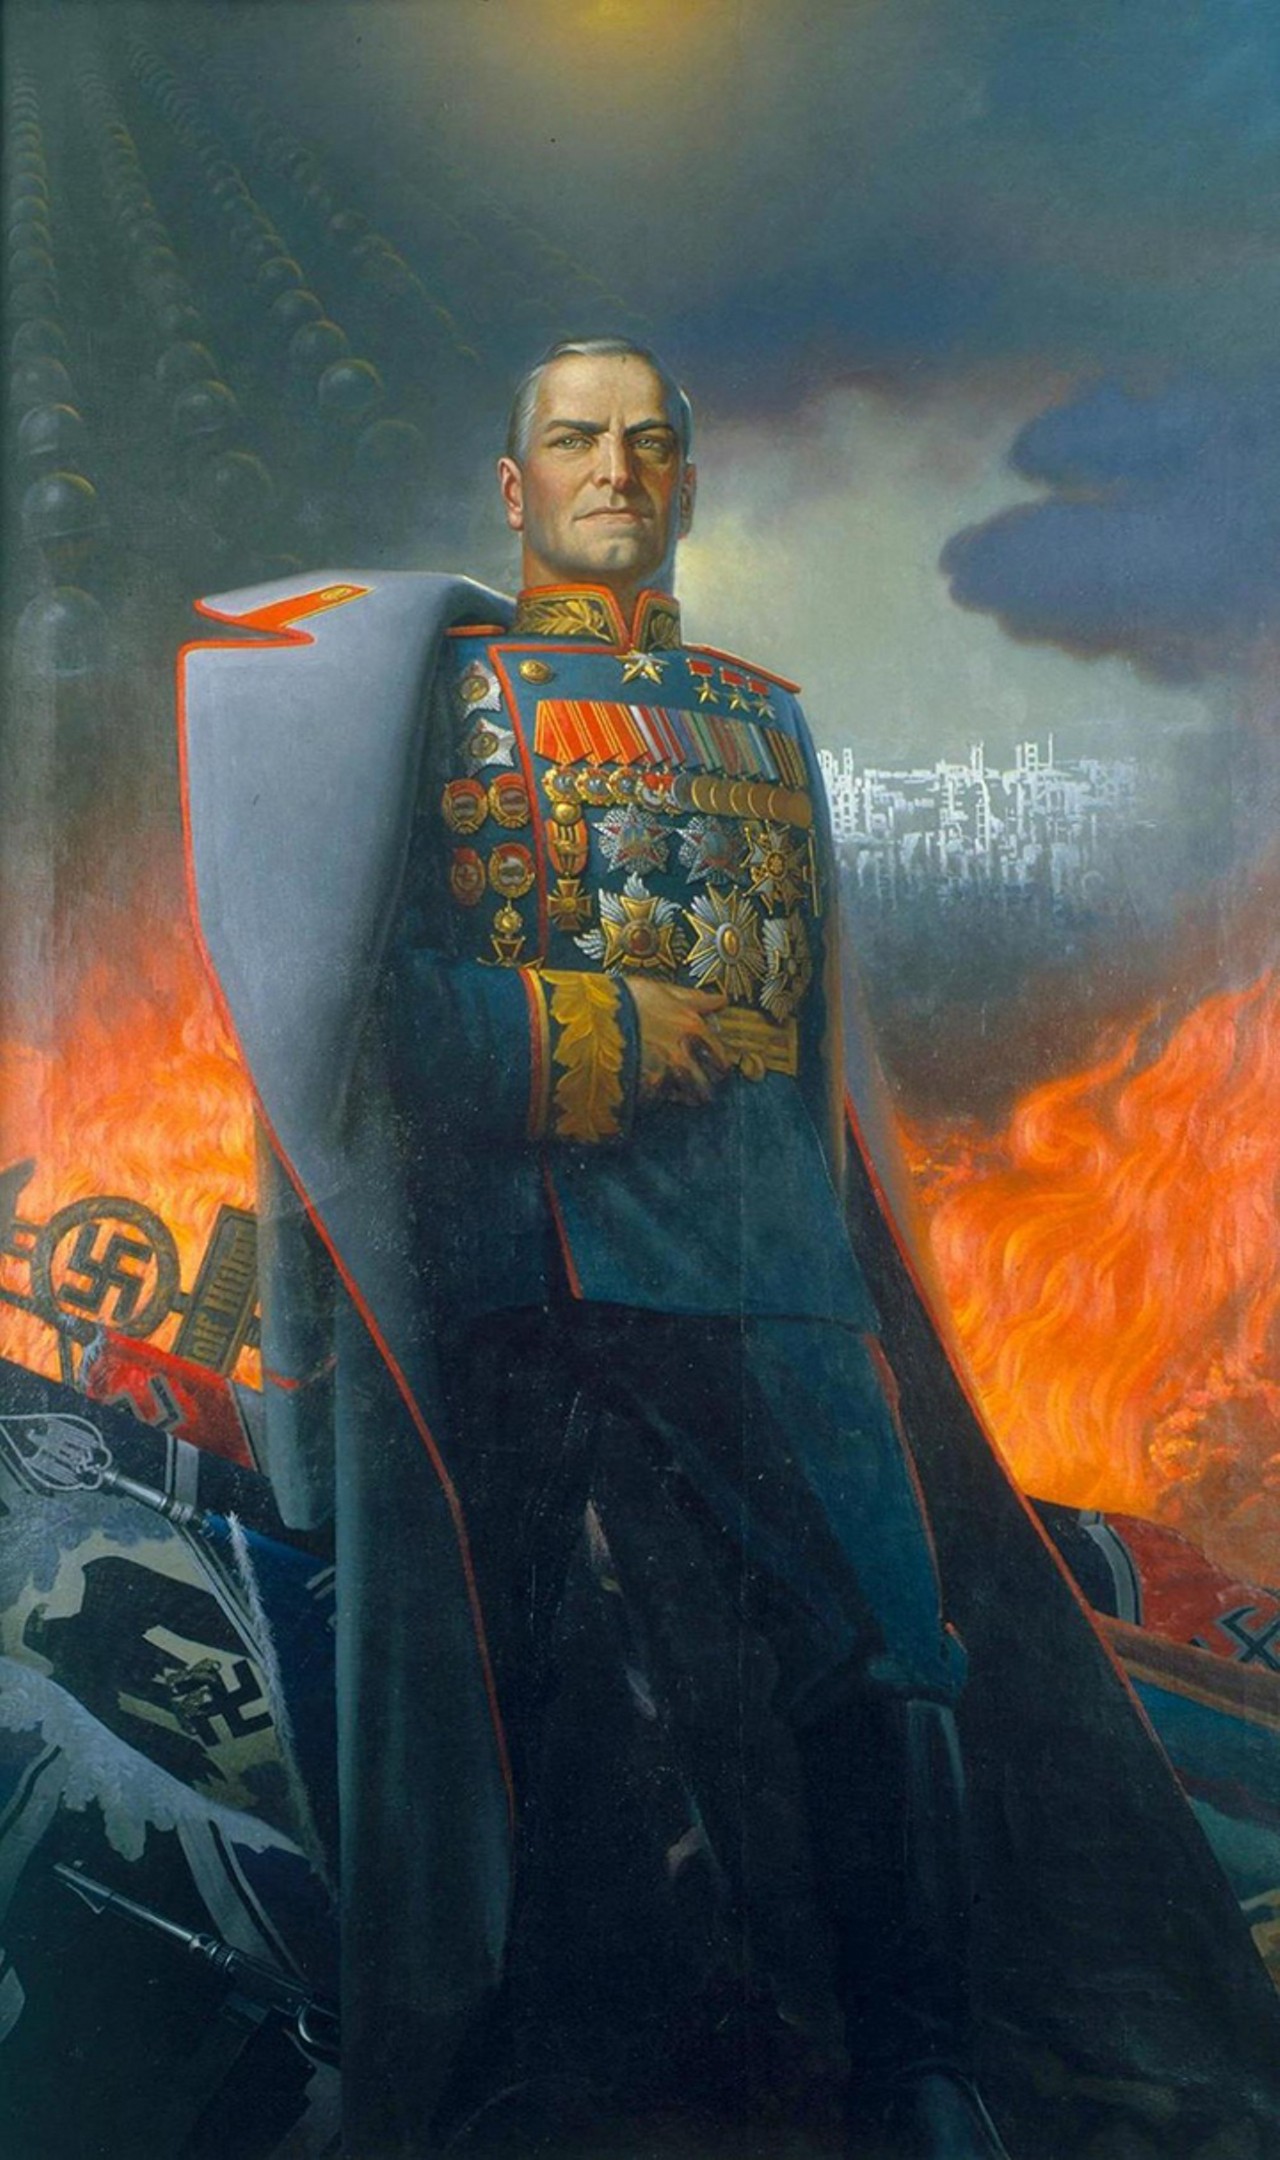 Wednesday, Aug. 3Marshal Zhukov's Imperial Stout Spotlight at Redlight RedlightPainting by Konstantin Vasiliev